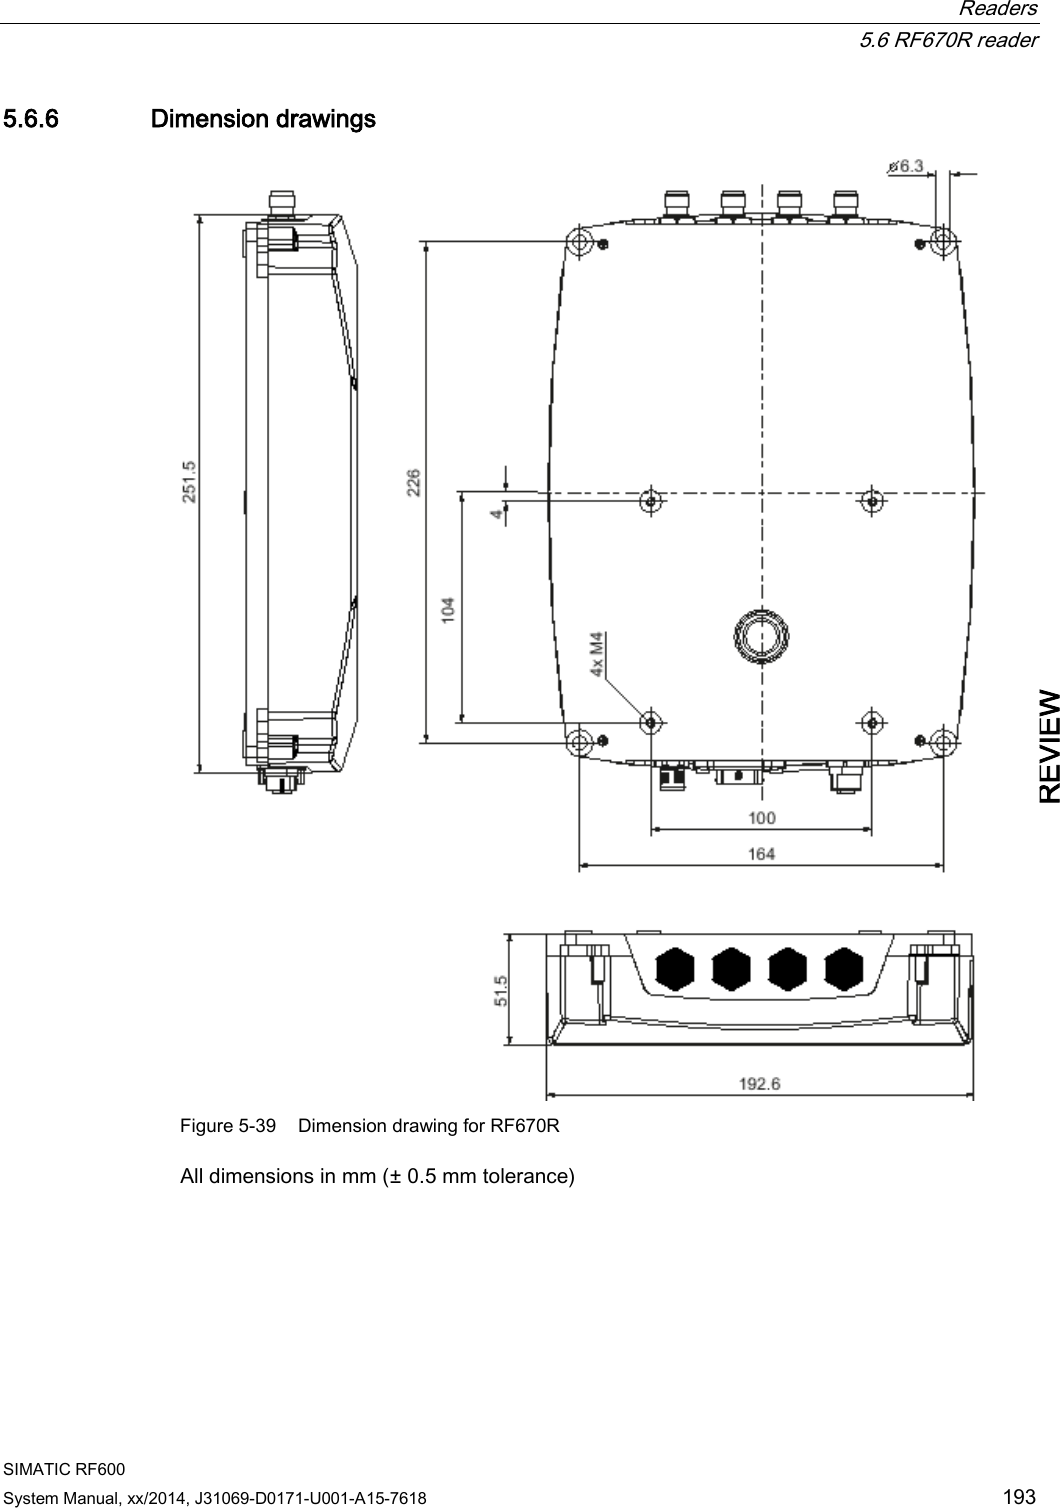  Readers  5.6 RF670R reader SIMATIC RF600 System Manual, xx/2014, J31069-D0171-U001-A15-7618 193 REVIEW 5.6.6 Dimension drawings  Figure 5-39 Dimension drawing for RF670R All dimensions in mm (± 0.5 mm tolerance)  